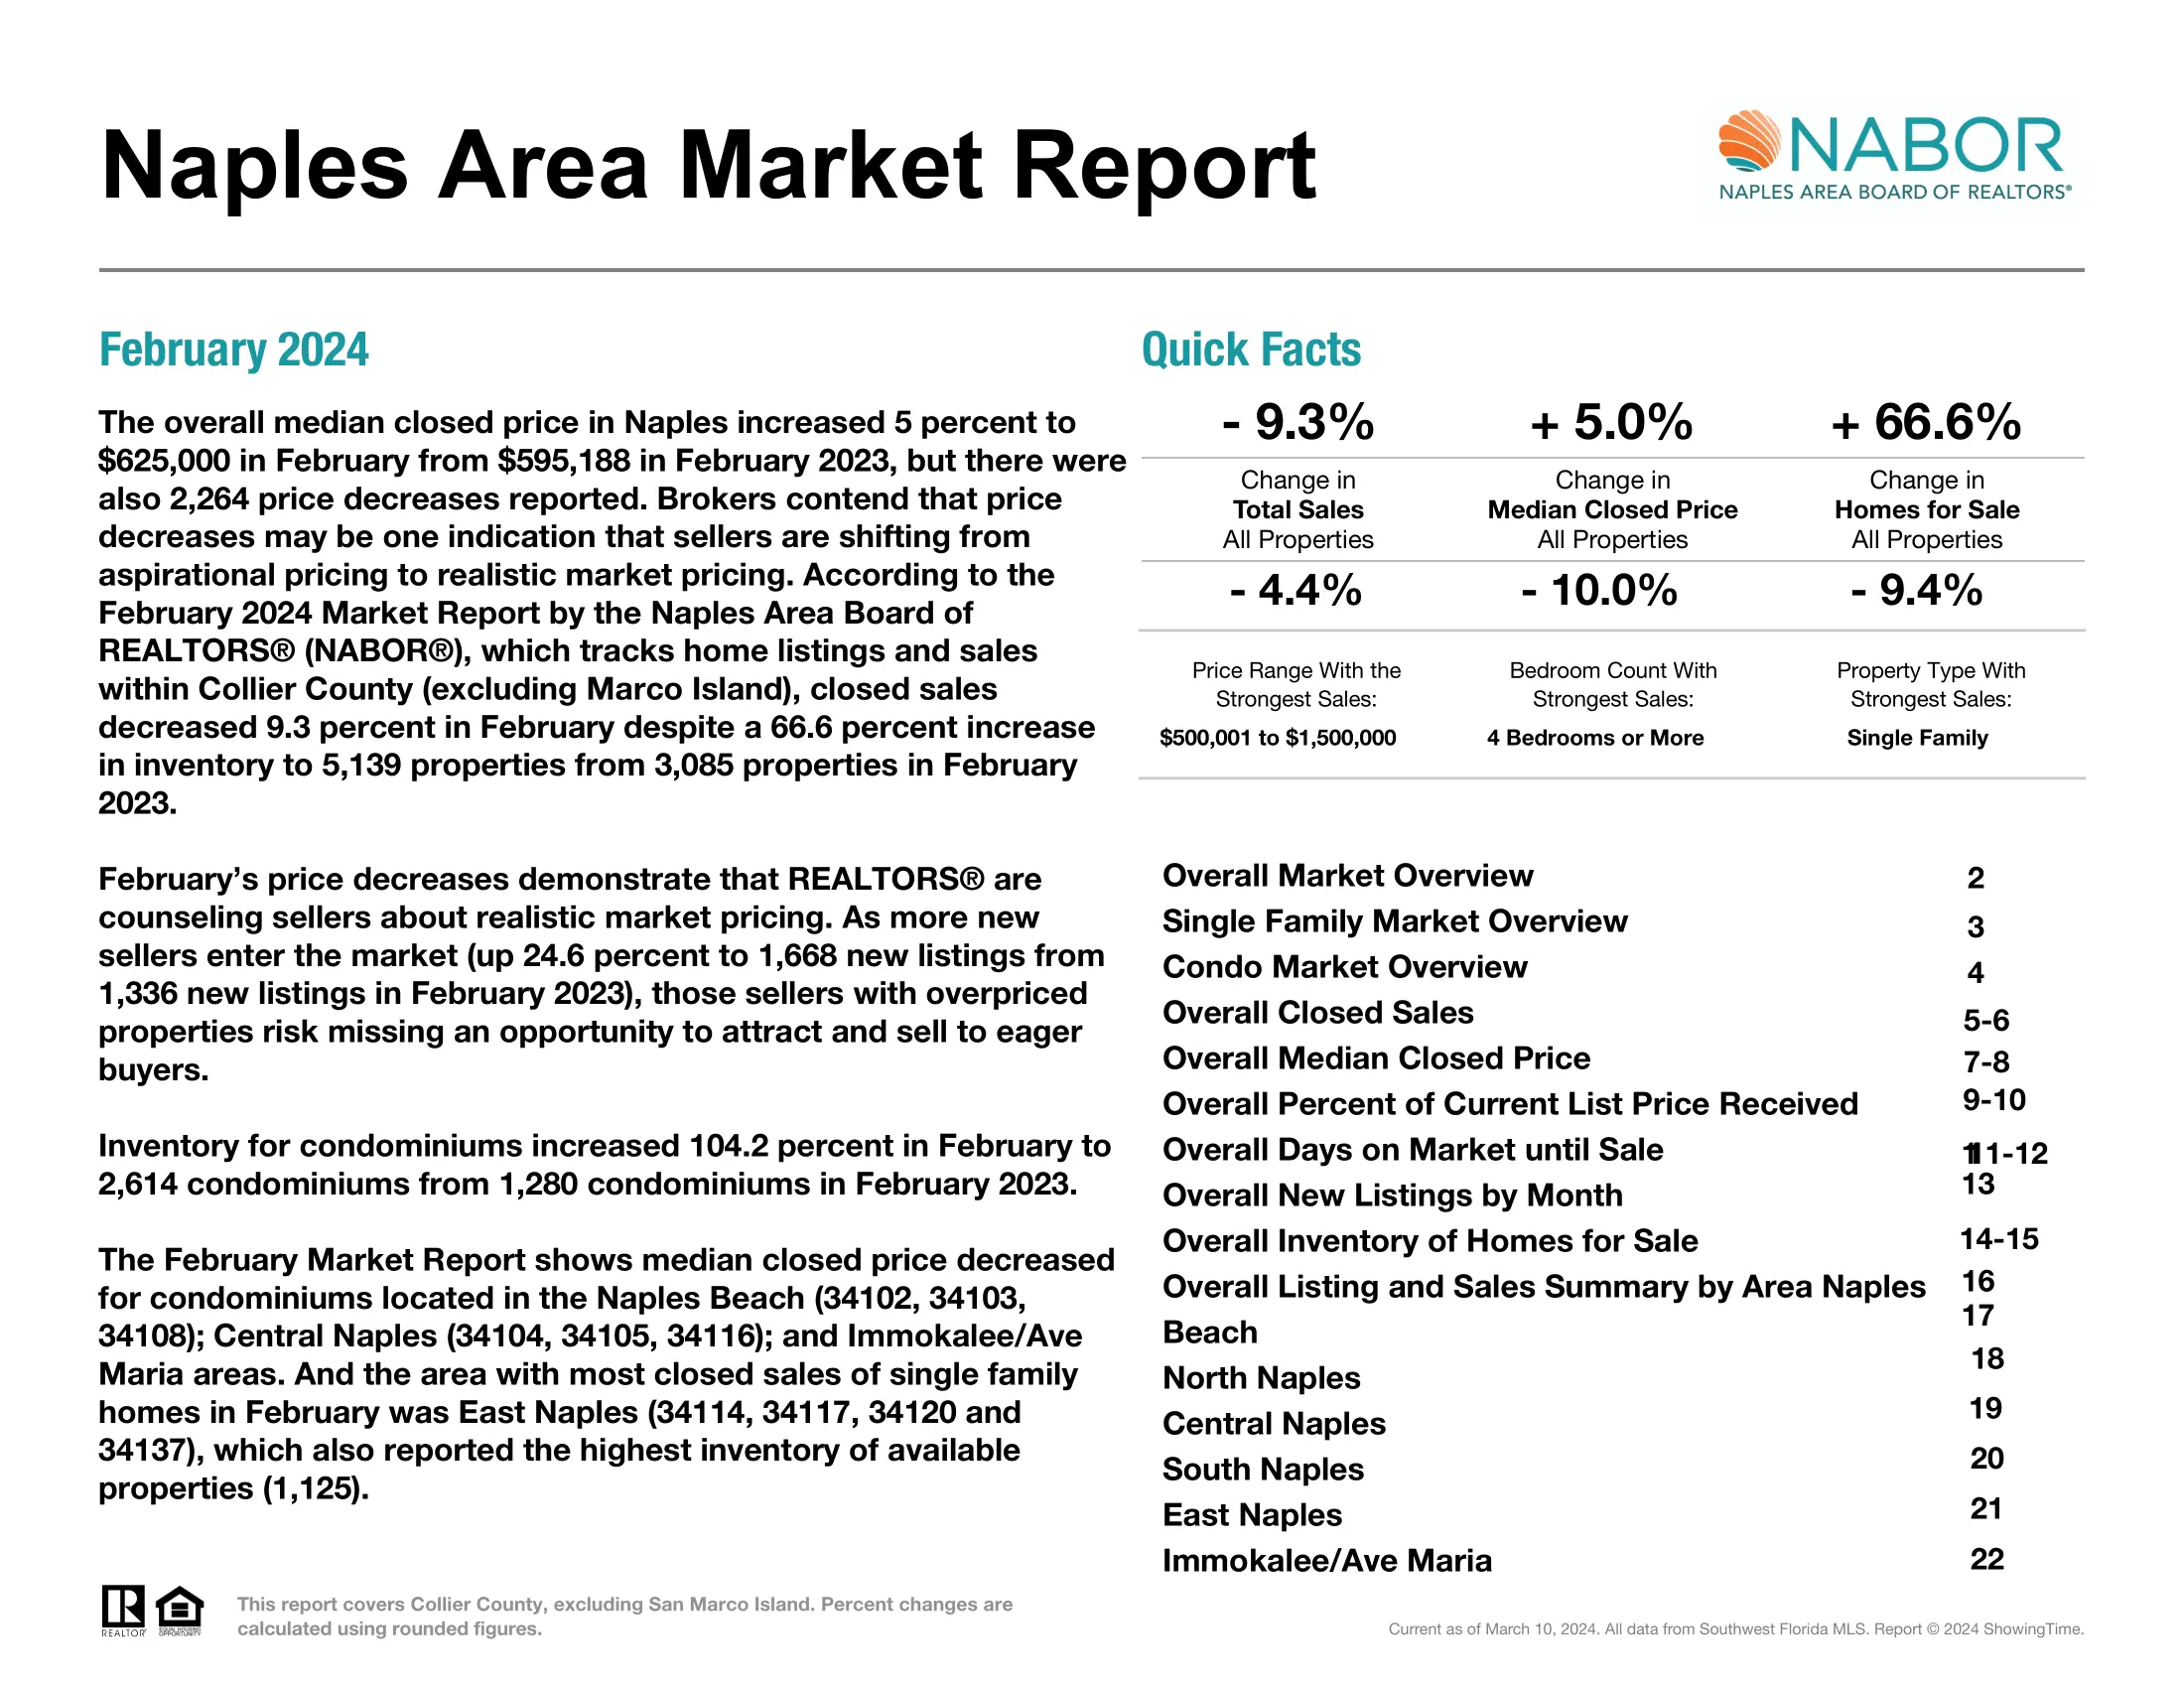 February 2024 Nabor Market Report